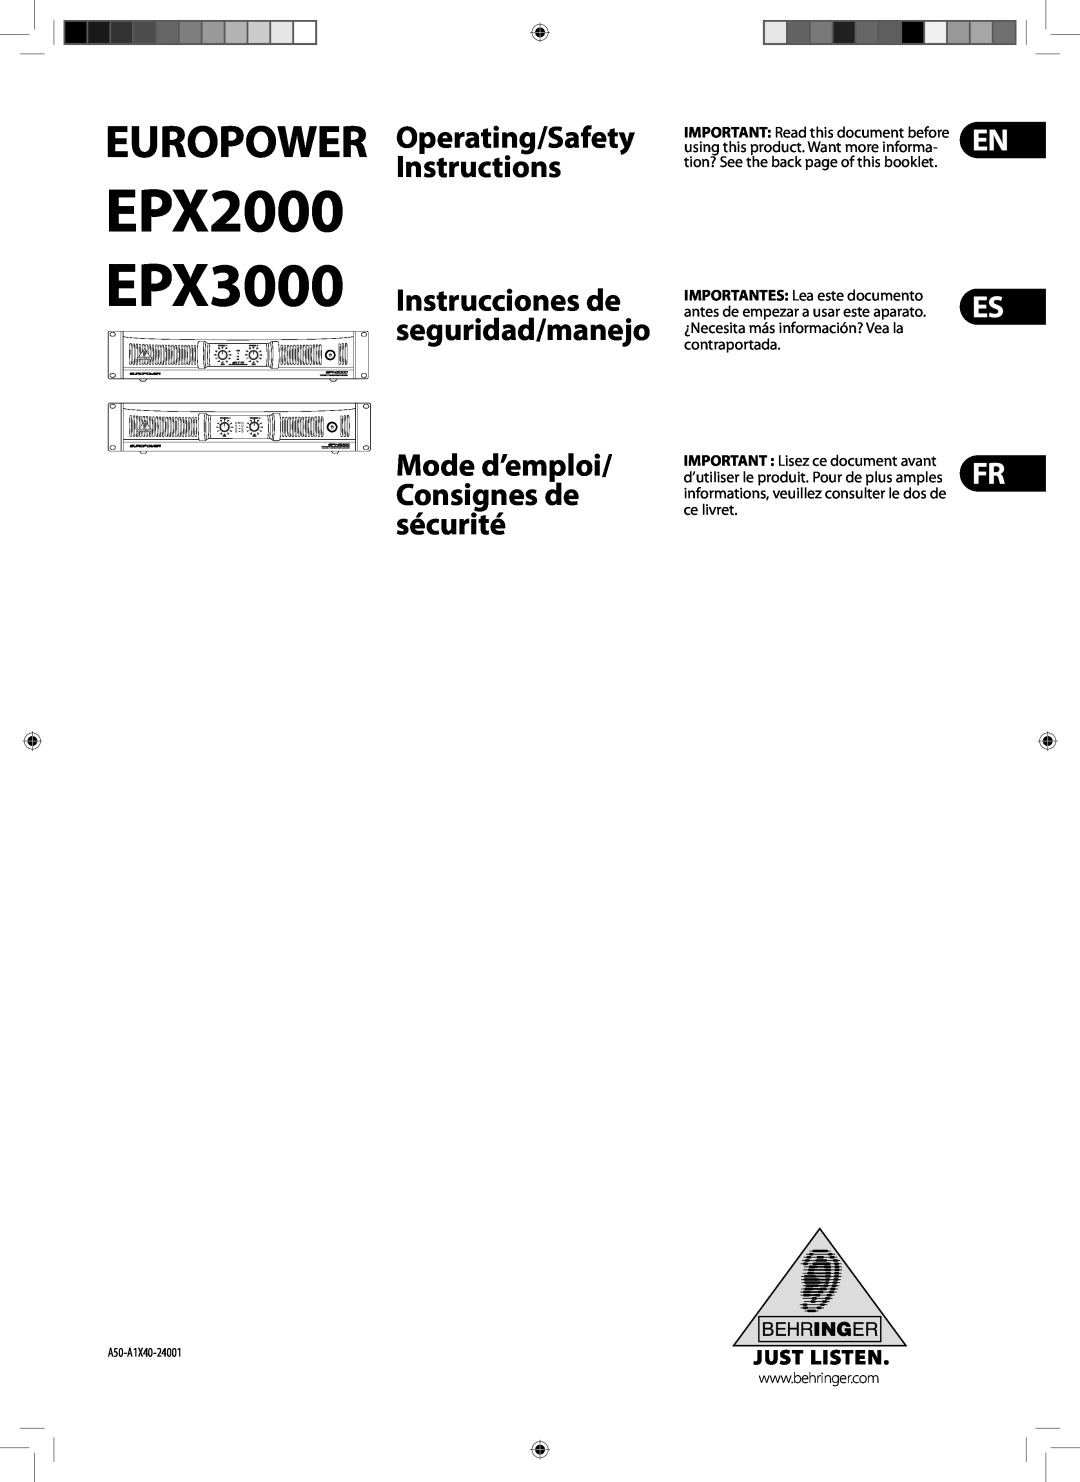 Behringer manual EPX3000 Instrucciones de seguridad/manejo, Mode d’emploi/ Consignes de sécurité, En Es Fr, EPX2000 